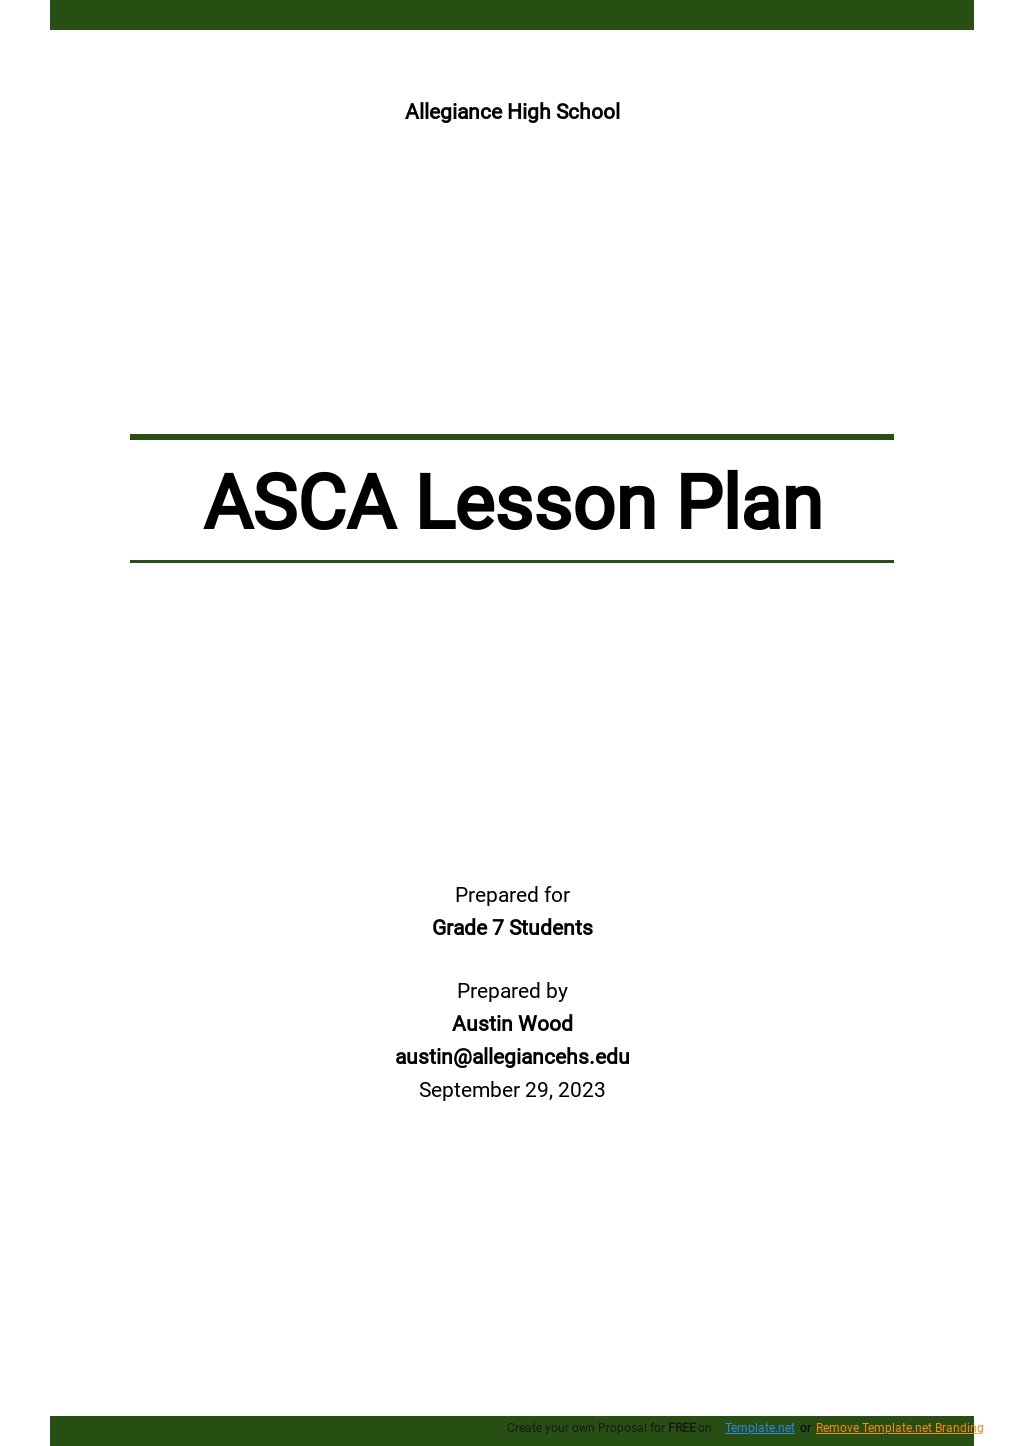 ASCA Lesson Plan Template.jpe